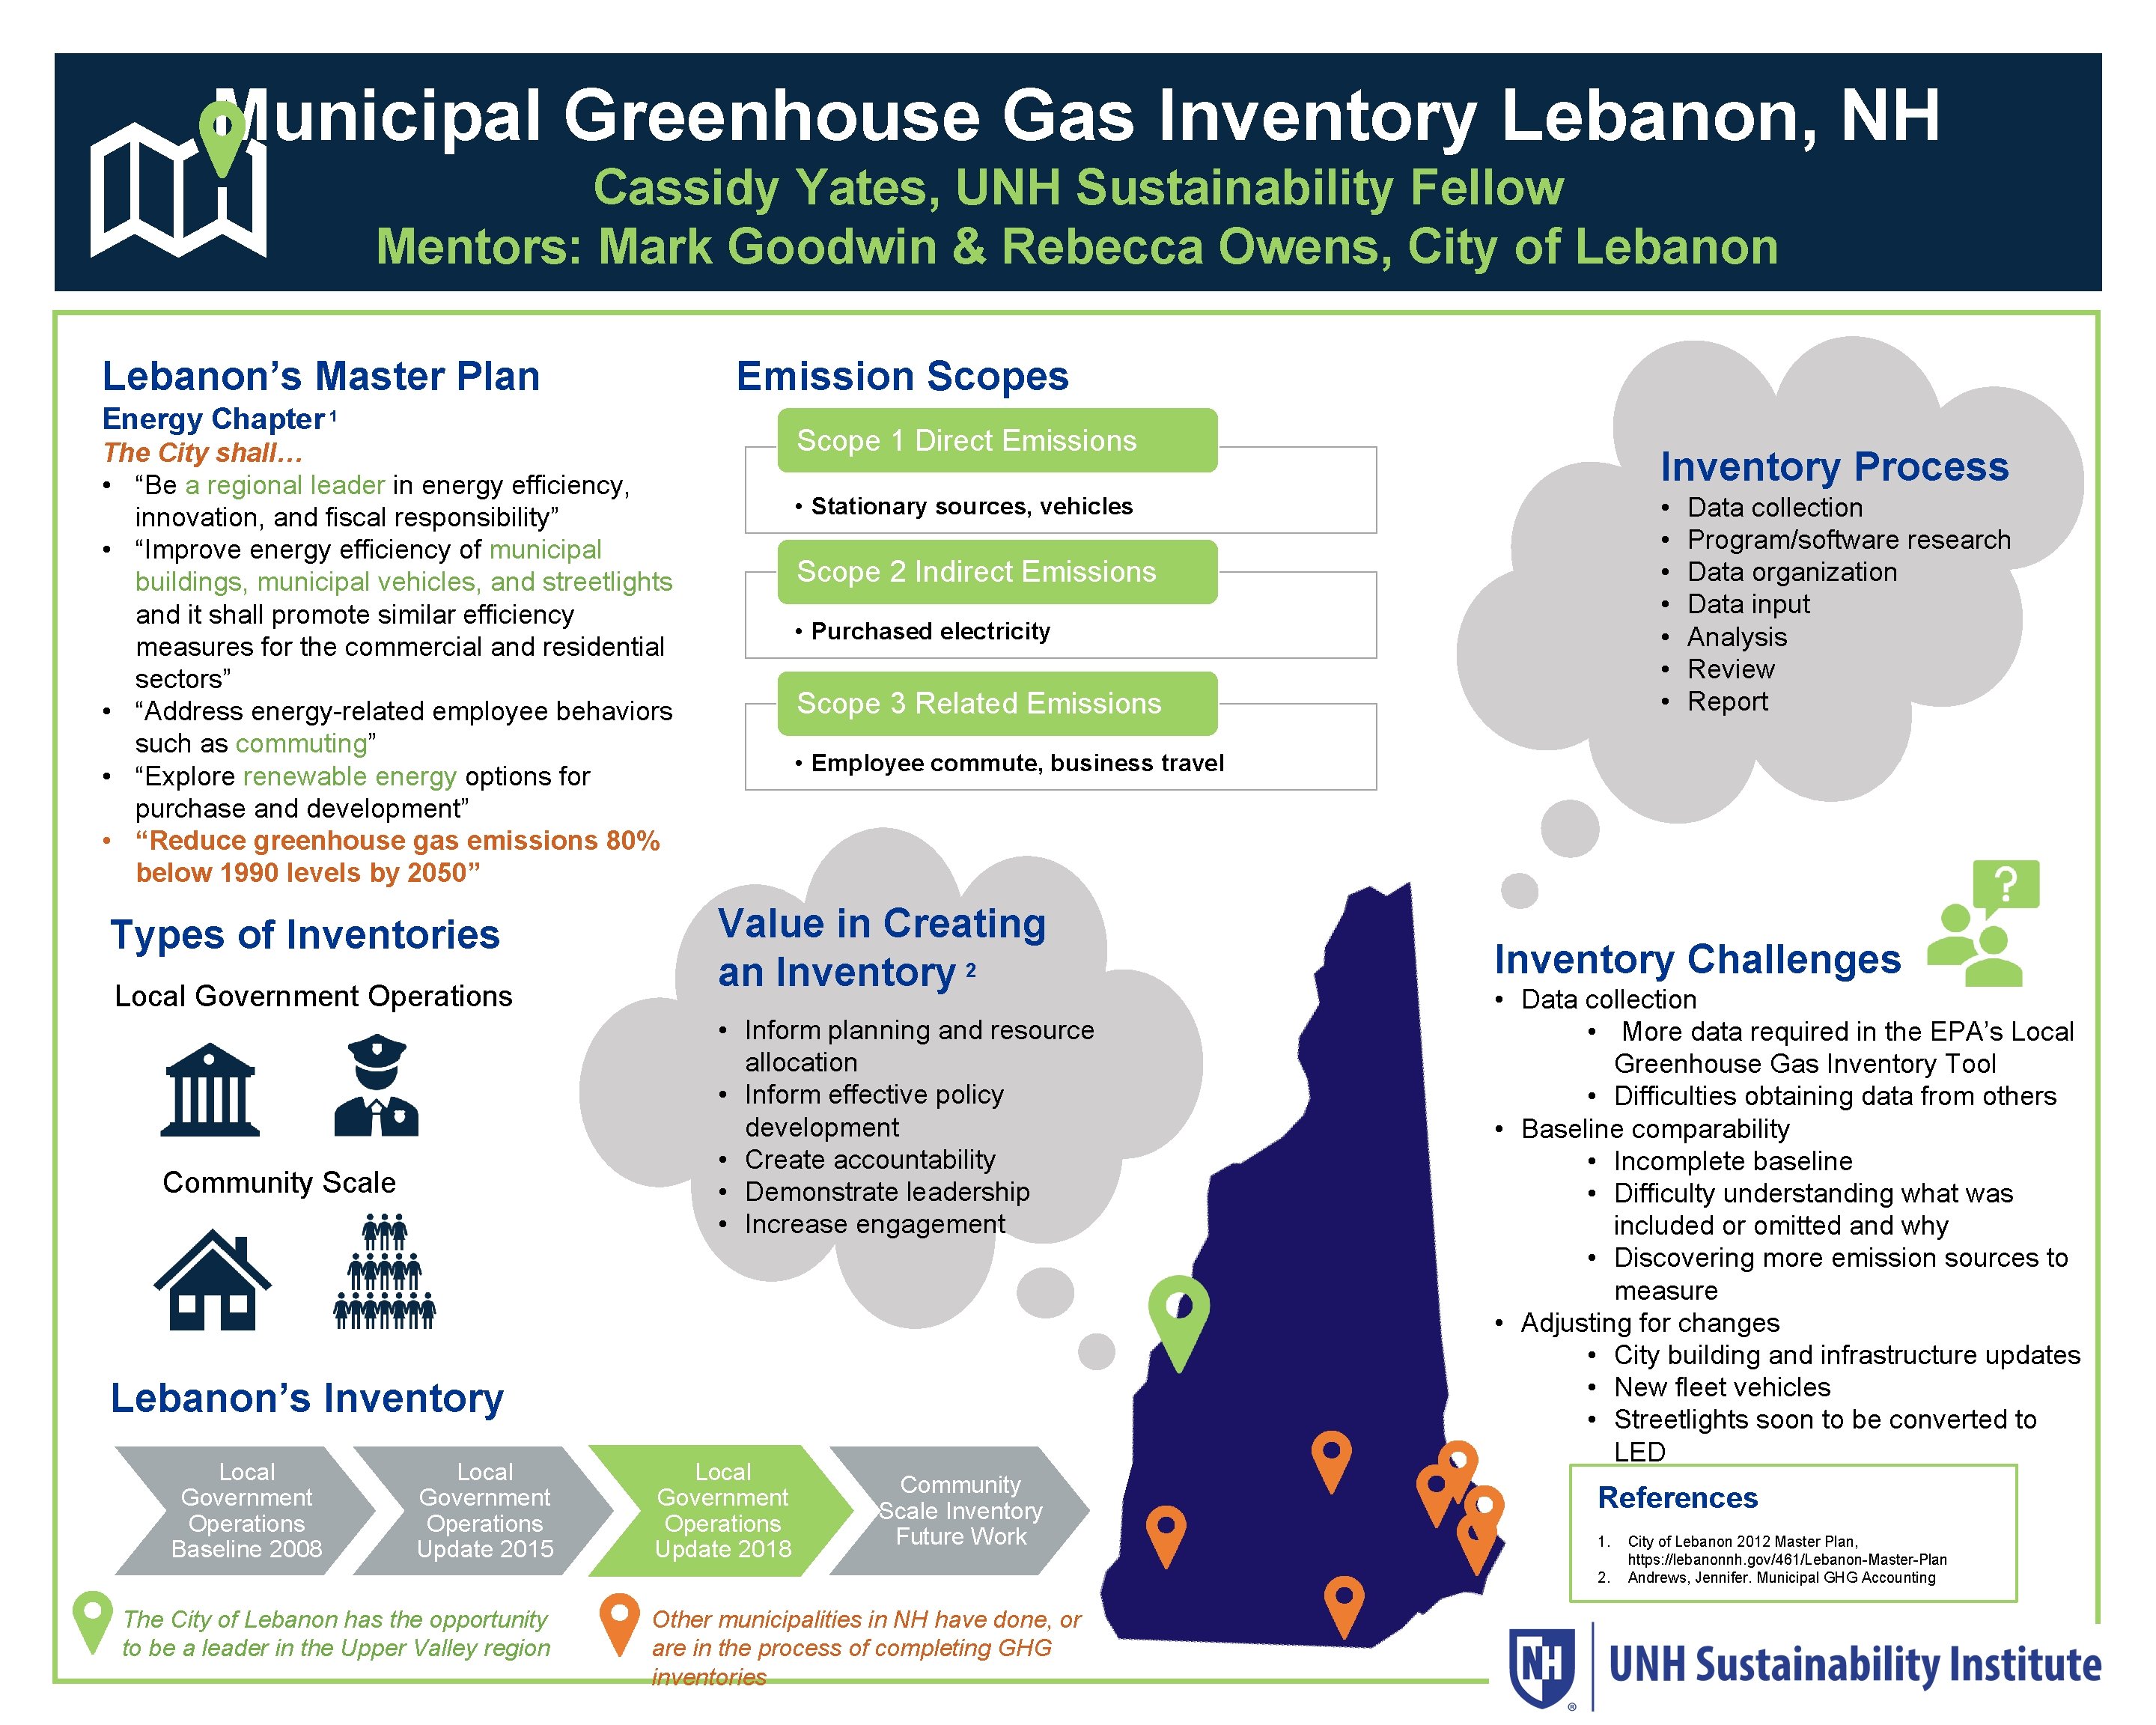 Municipal Greenhouse Gas Inventory Lebanon, NH Cassidy Yates, UNH Sustainability Fellow Mentors: Mark Goodwin